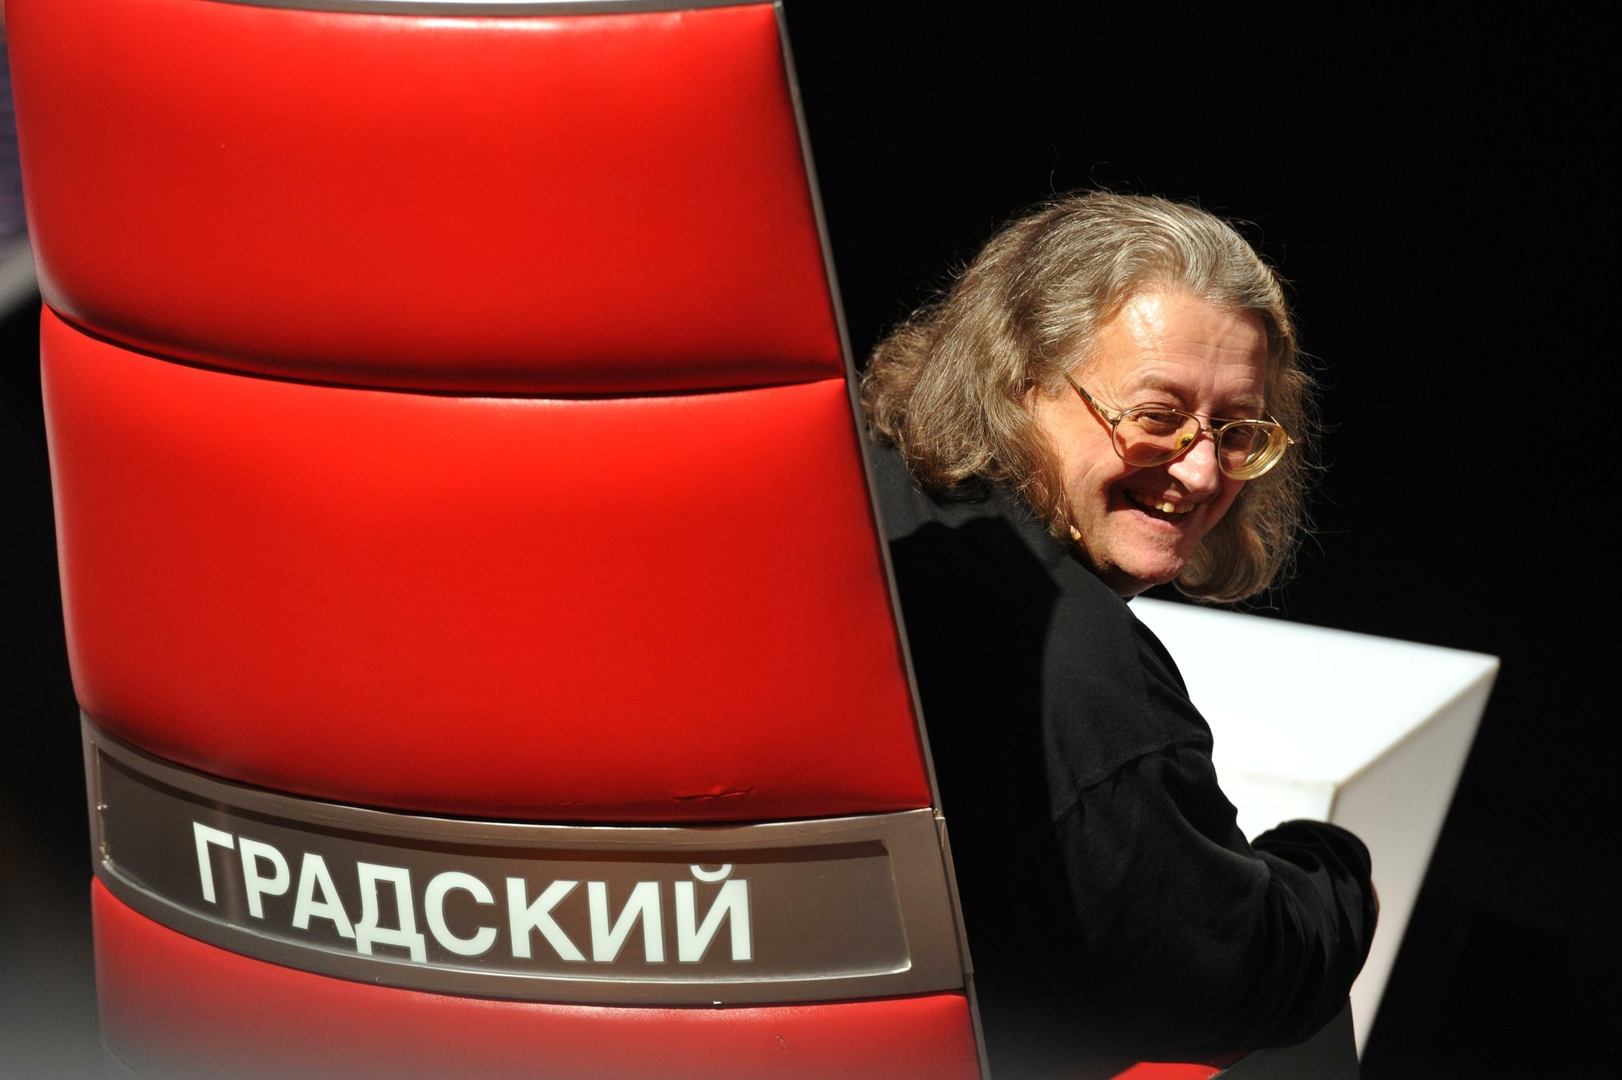 Александр Градский в кресле члена жюри шоу «Голос»